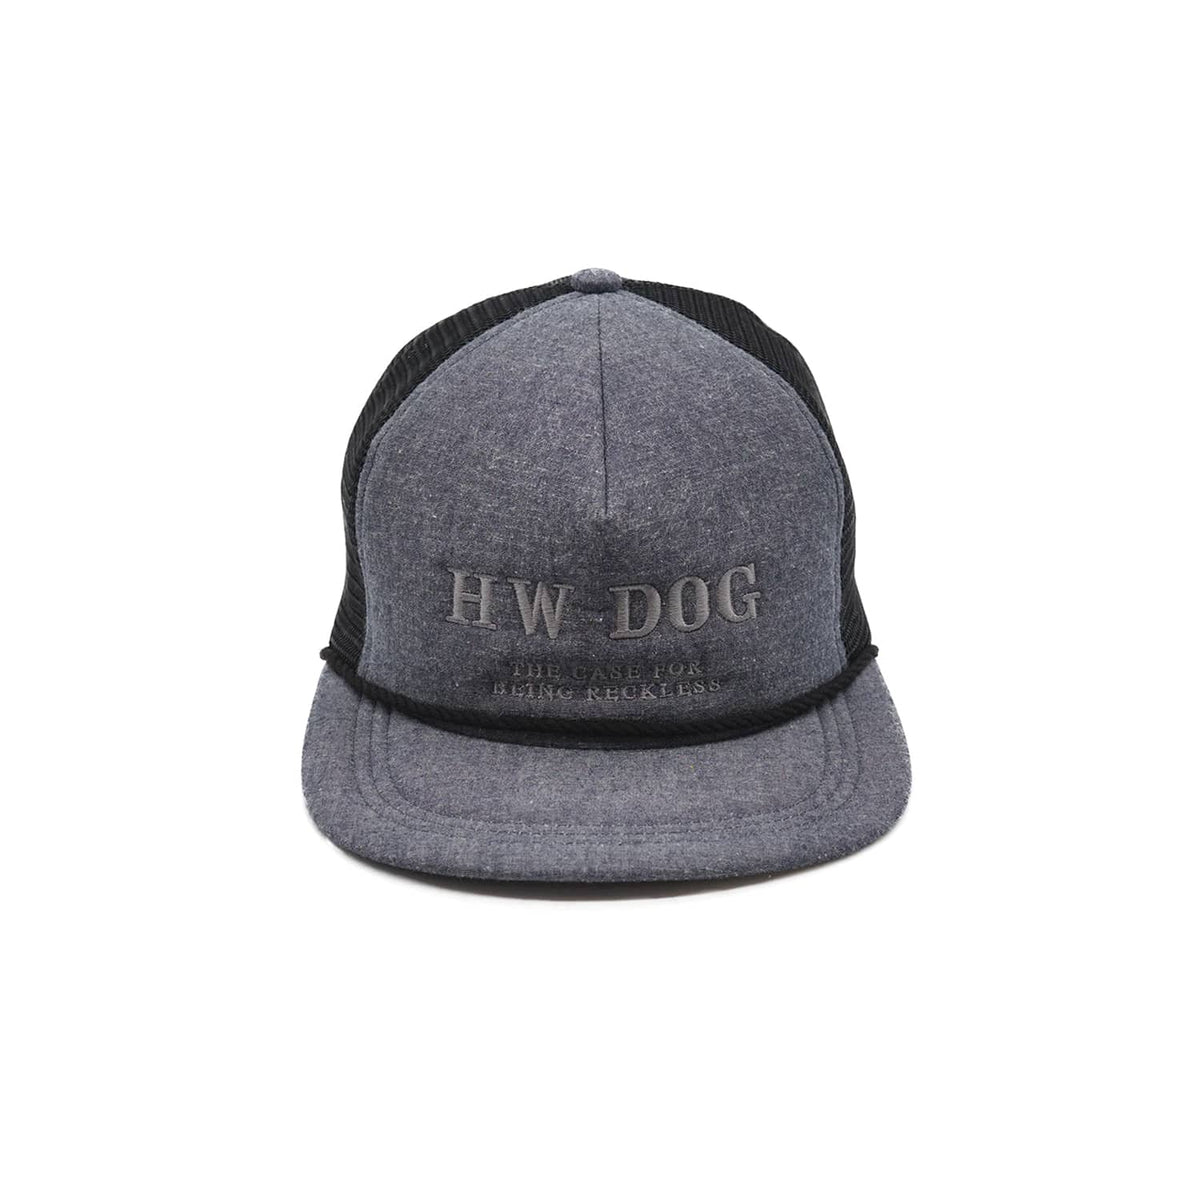 Co. & Mesh Brown Dog Cap H.W. Trucker